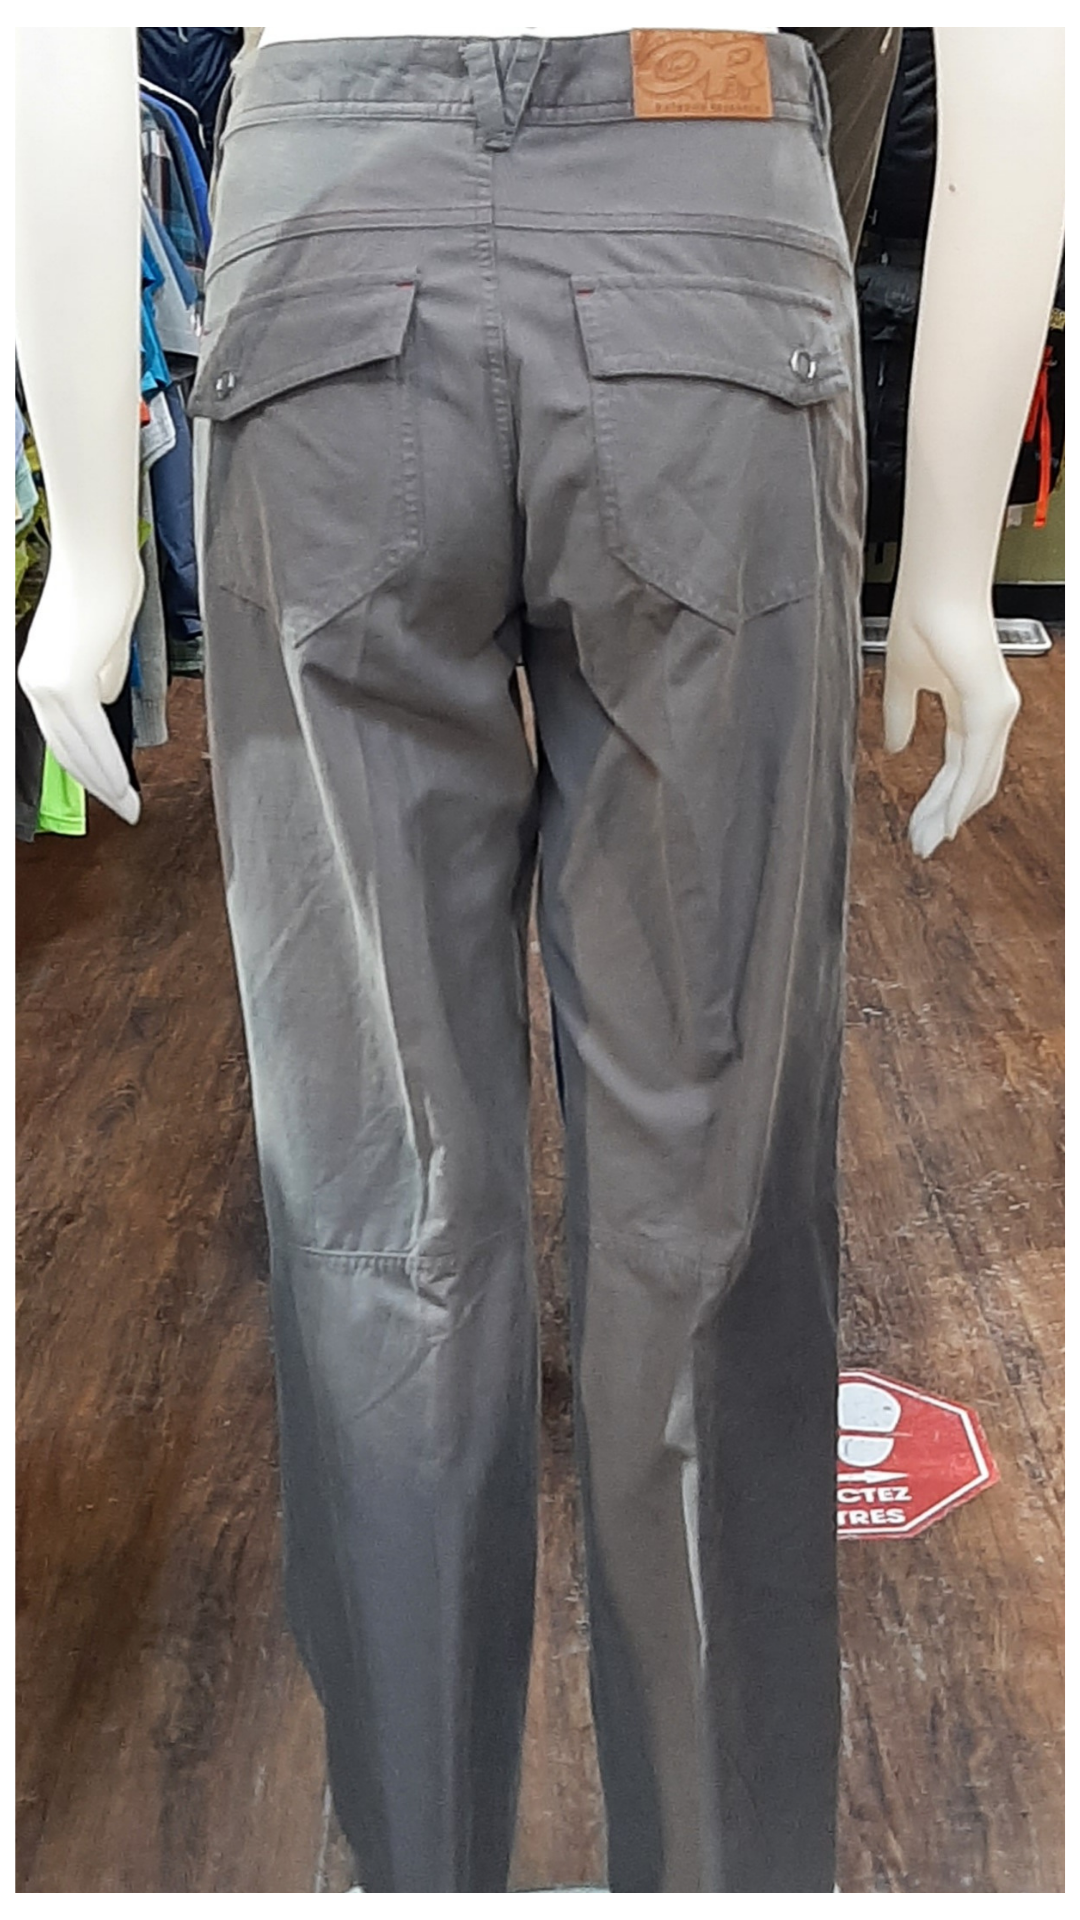 OR Vagabond pantalons Femme - Plein Air Entrepôt